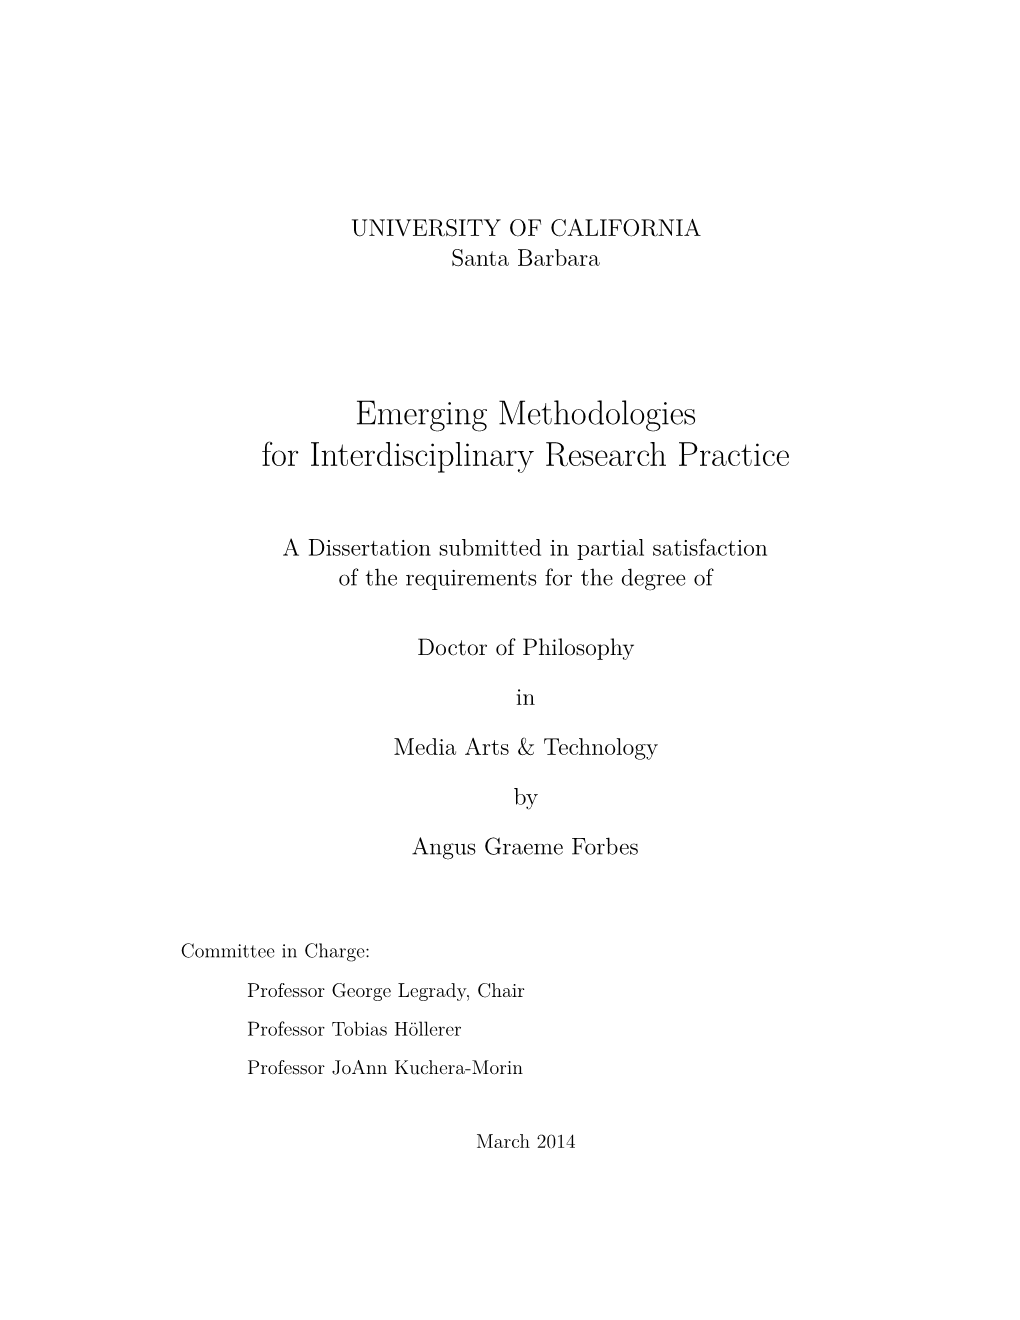 Emerging Methodologies for Interdisciplinary Research Practice